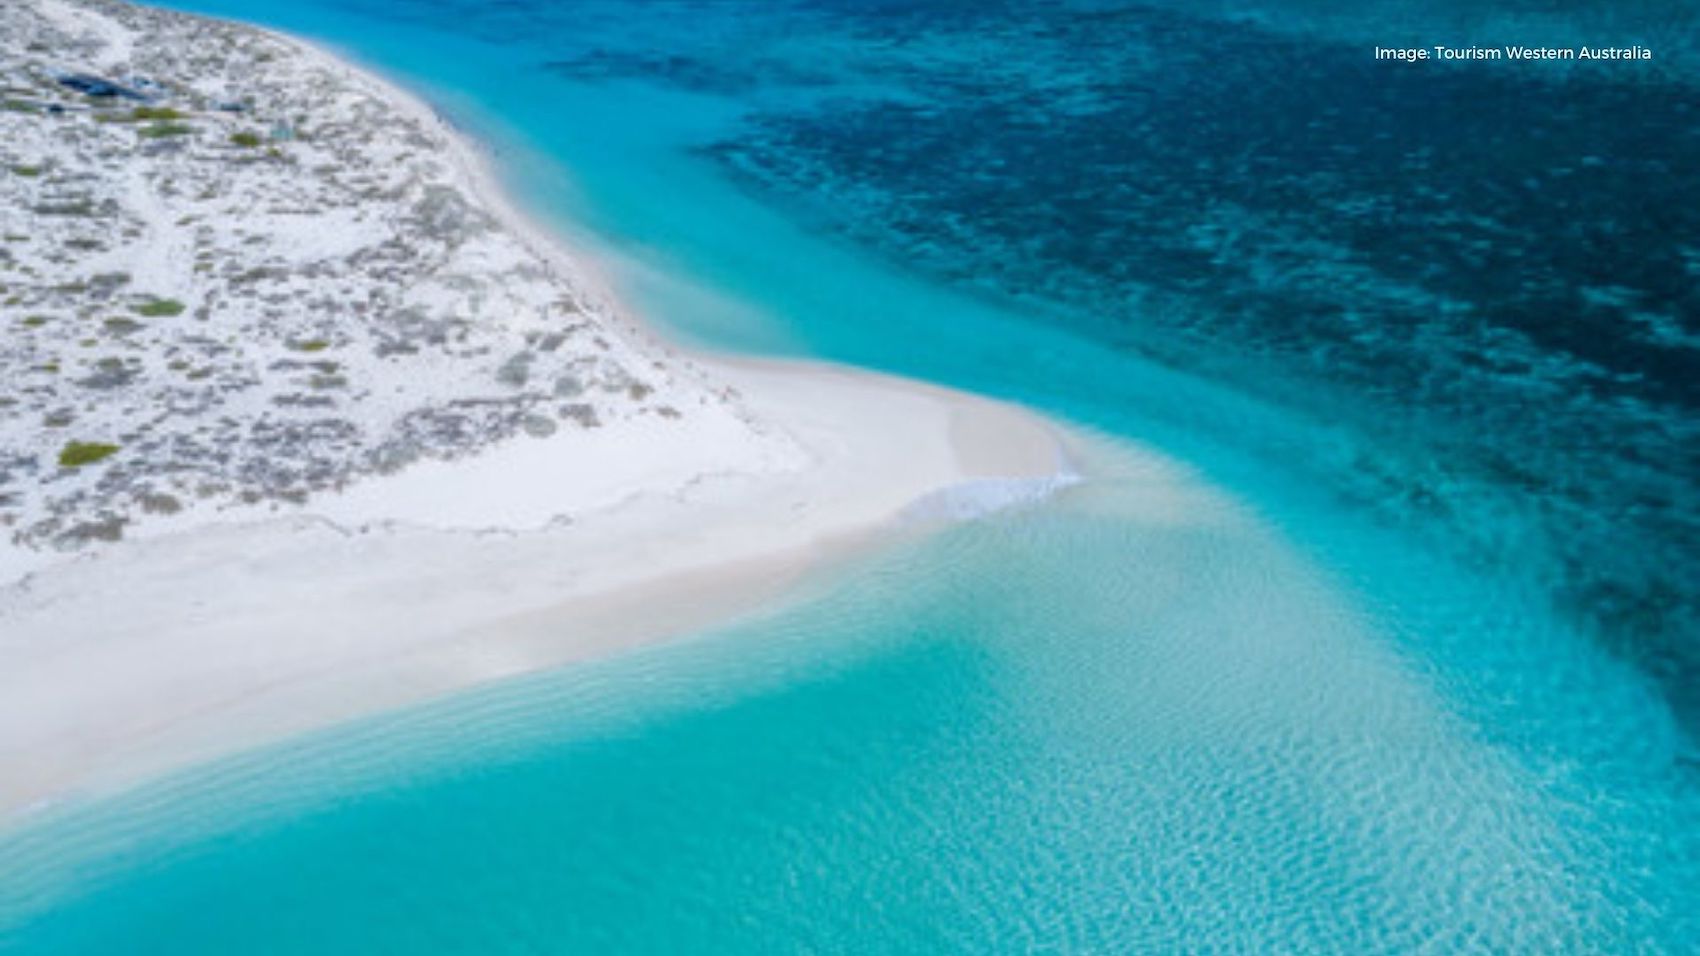 Turquoise water surrounding white beach | Tourism Western Australia